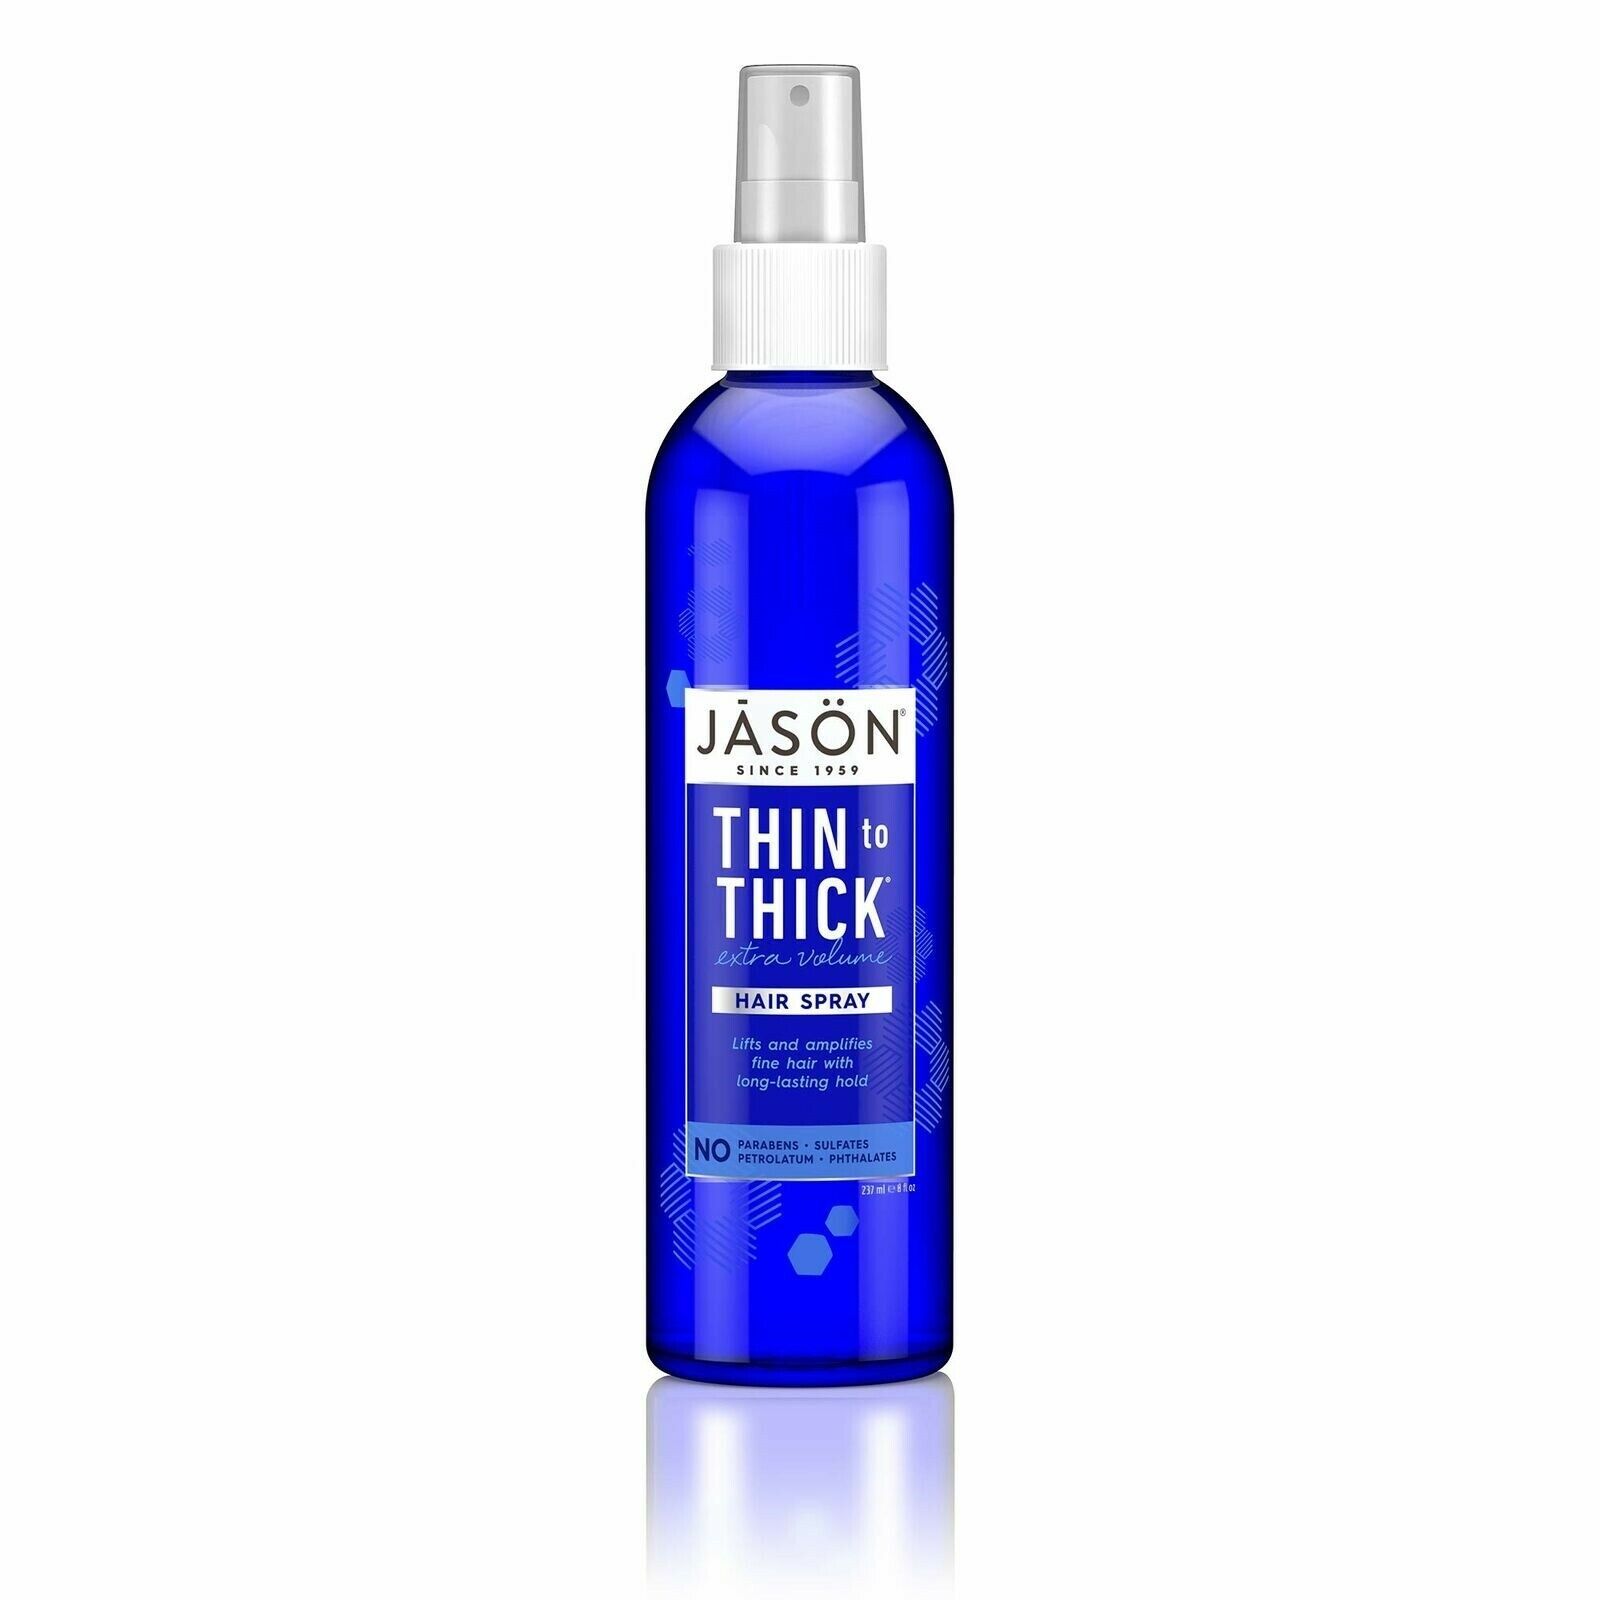 JASON Thin-to-Thick Extra Volume Hair Spray, 8 Ounce Bottle - $19.96